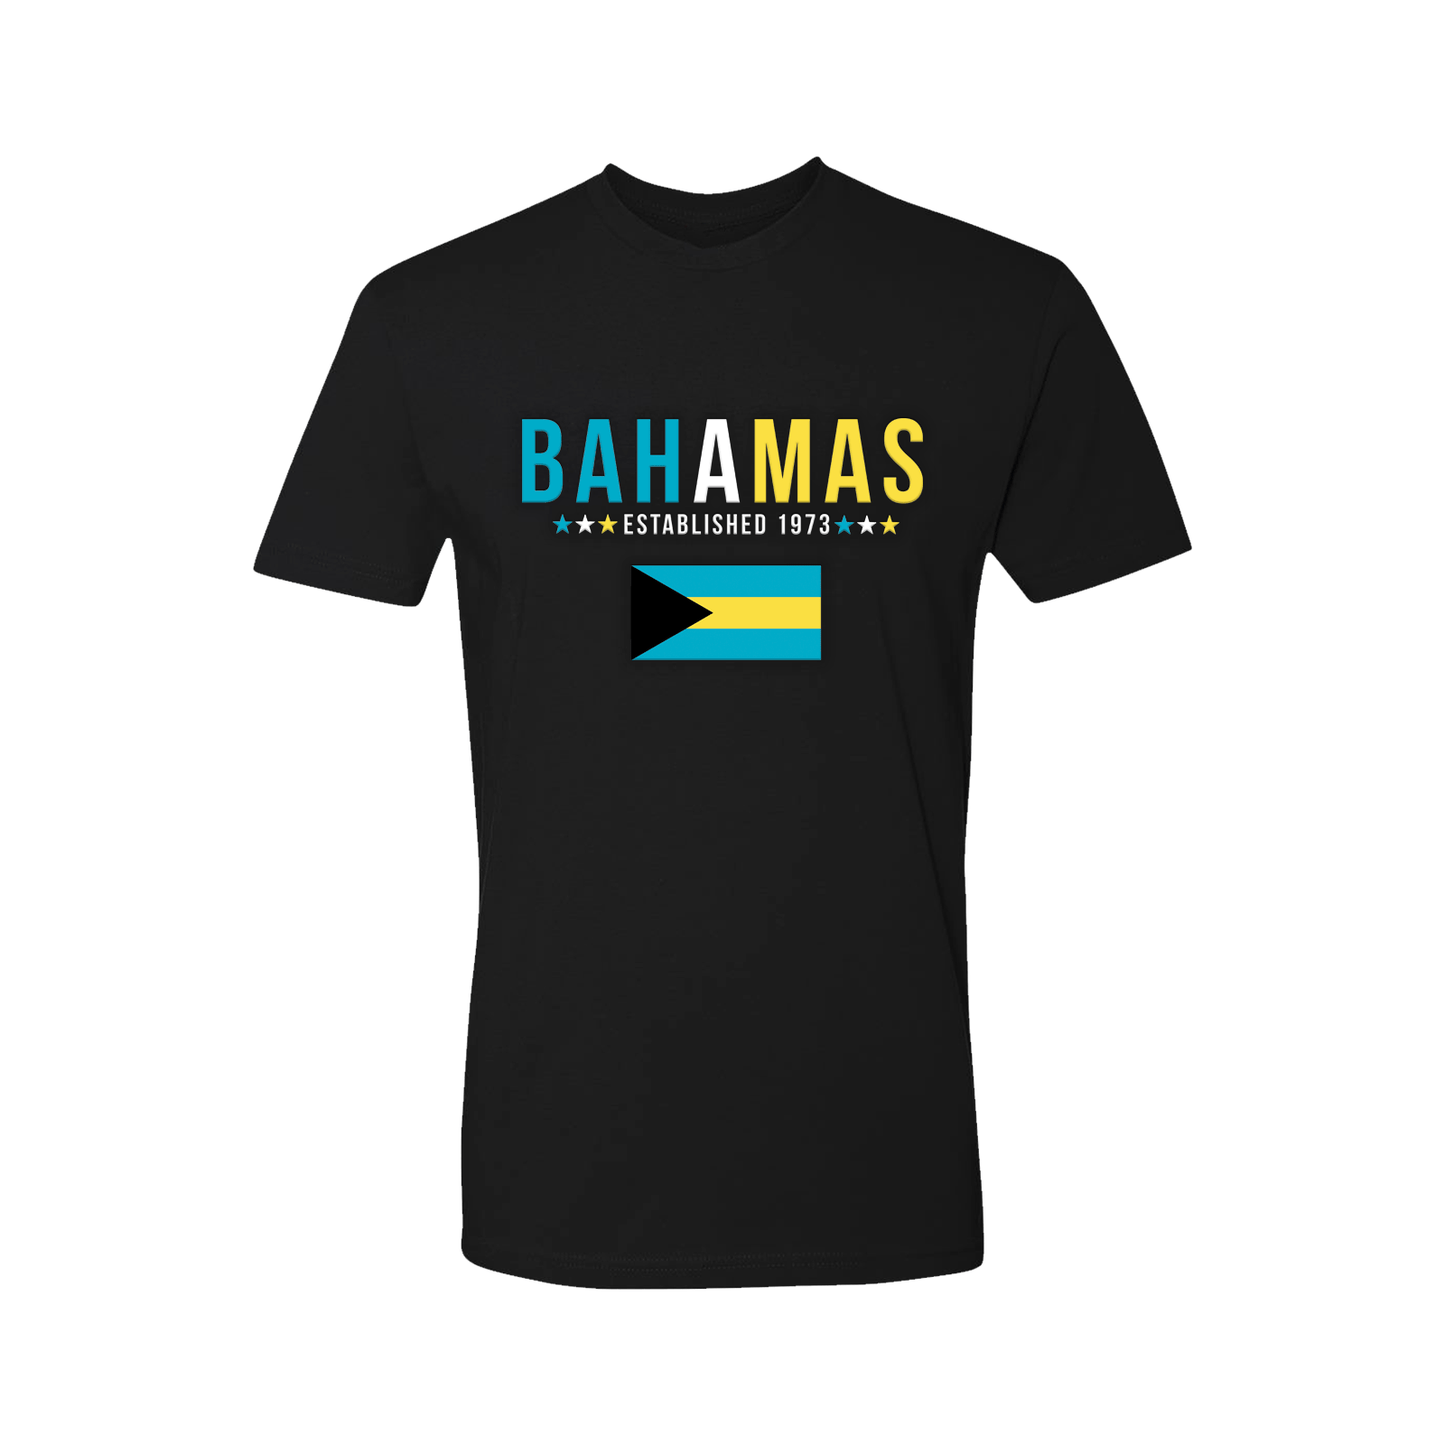 Bahamas Short Sleeve Shirt - Adult